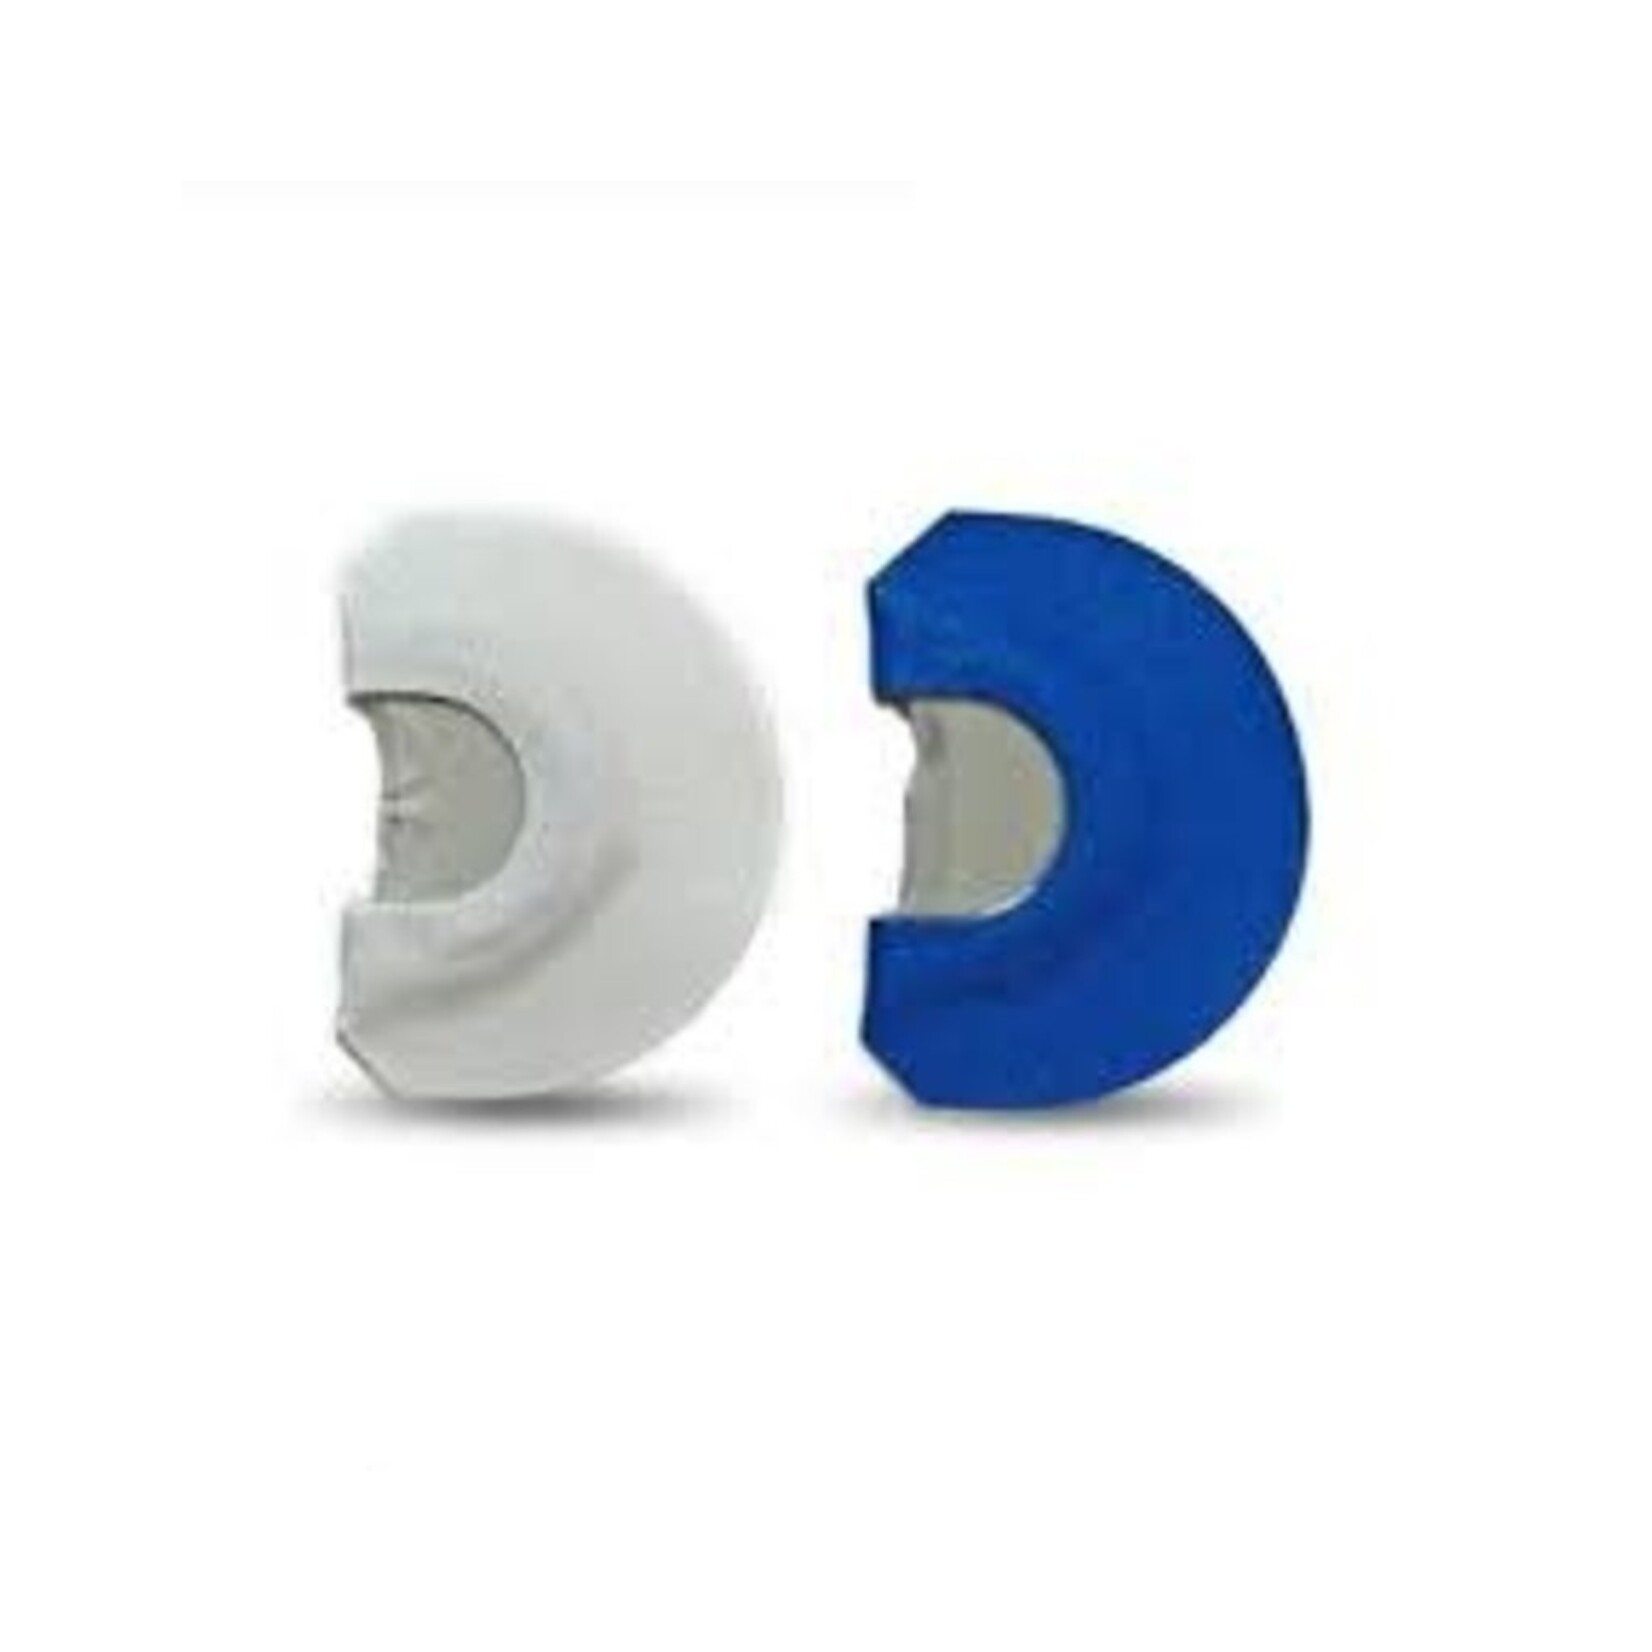 RECALL DESIGNS Appeau Dindon Recall Designs Diaphragme Bleu Et Blanc